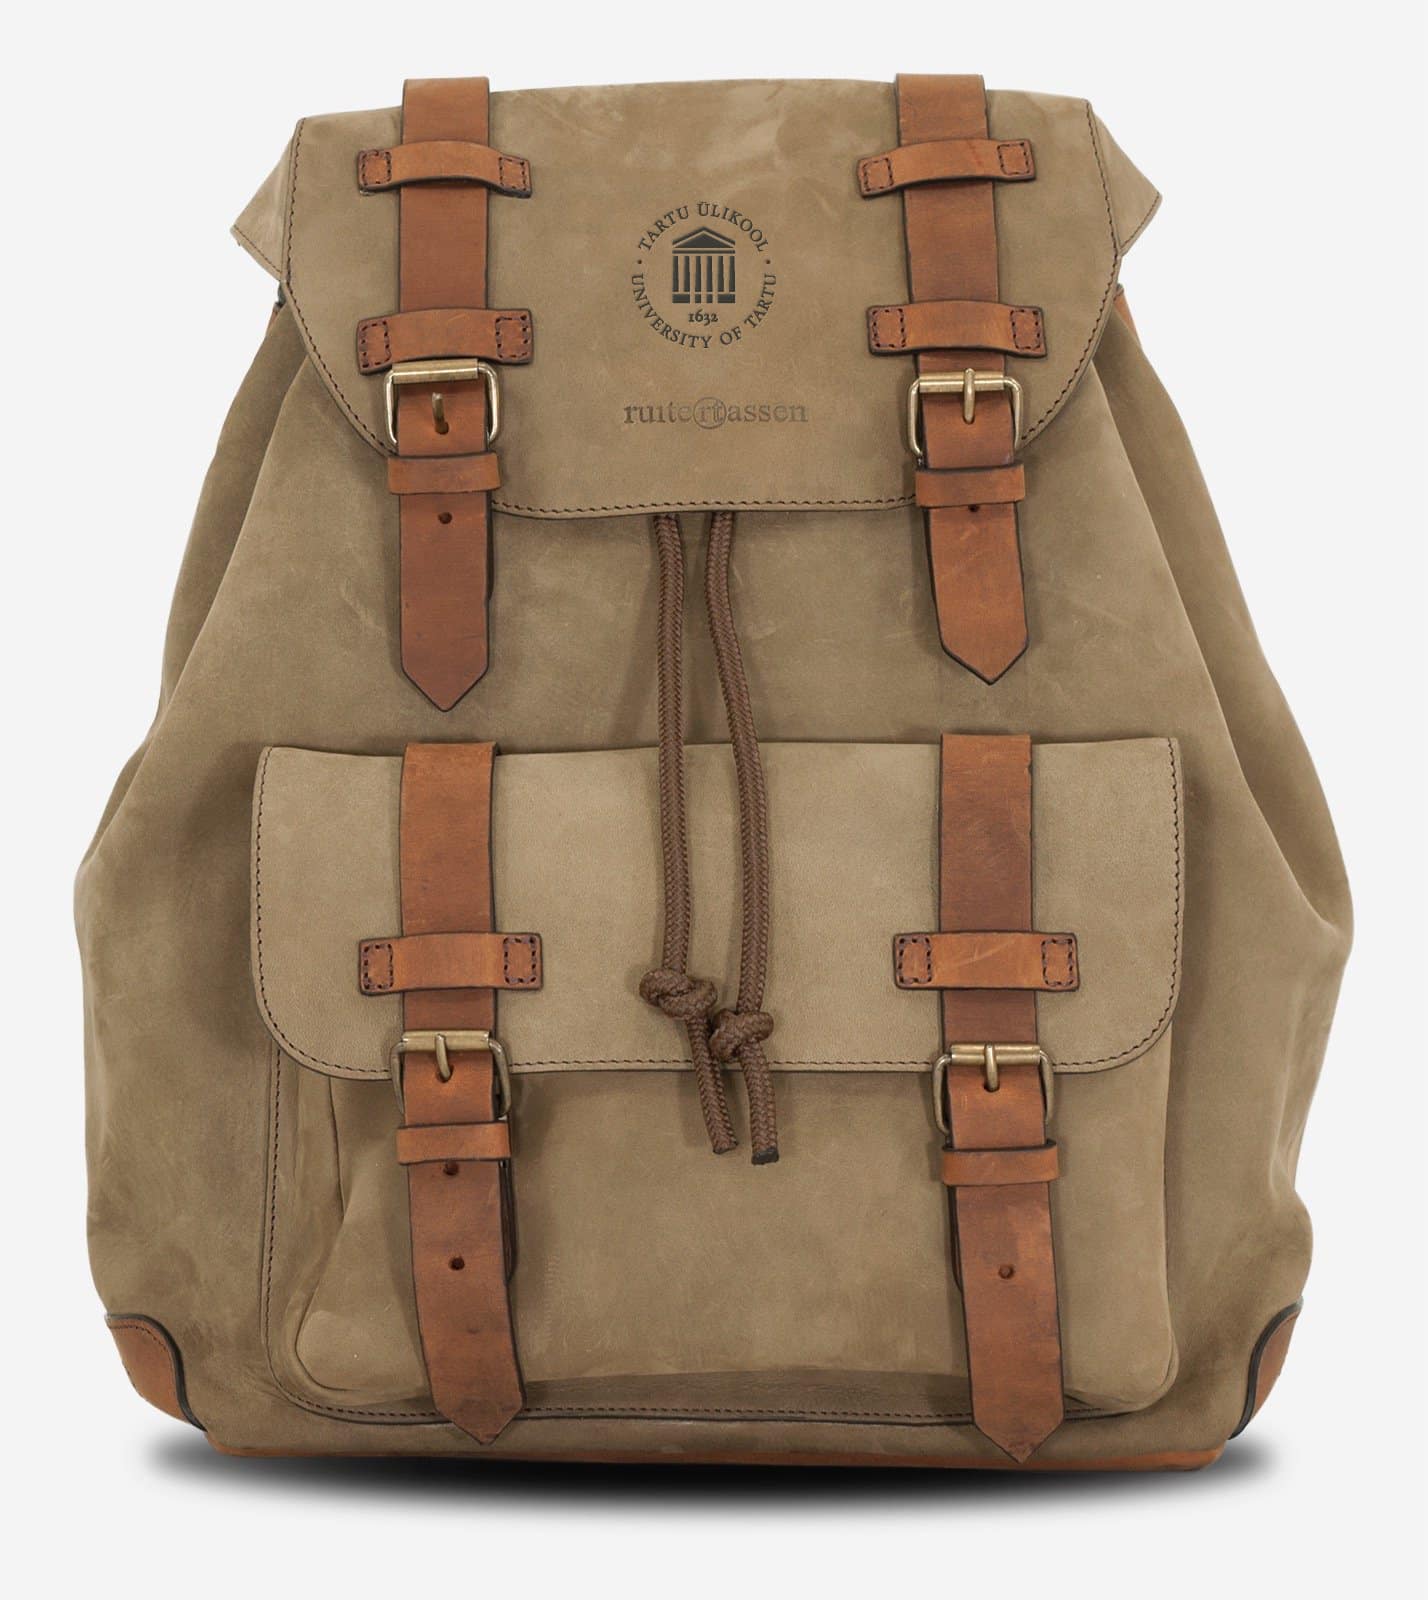 Tactical Range Backpack Bag | votagoo